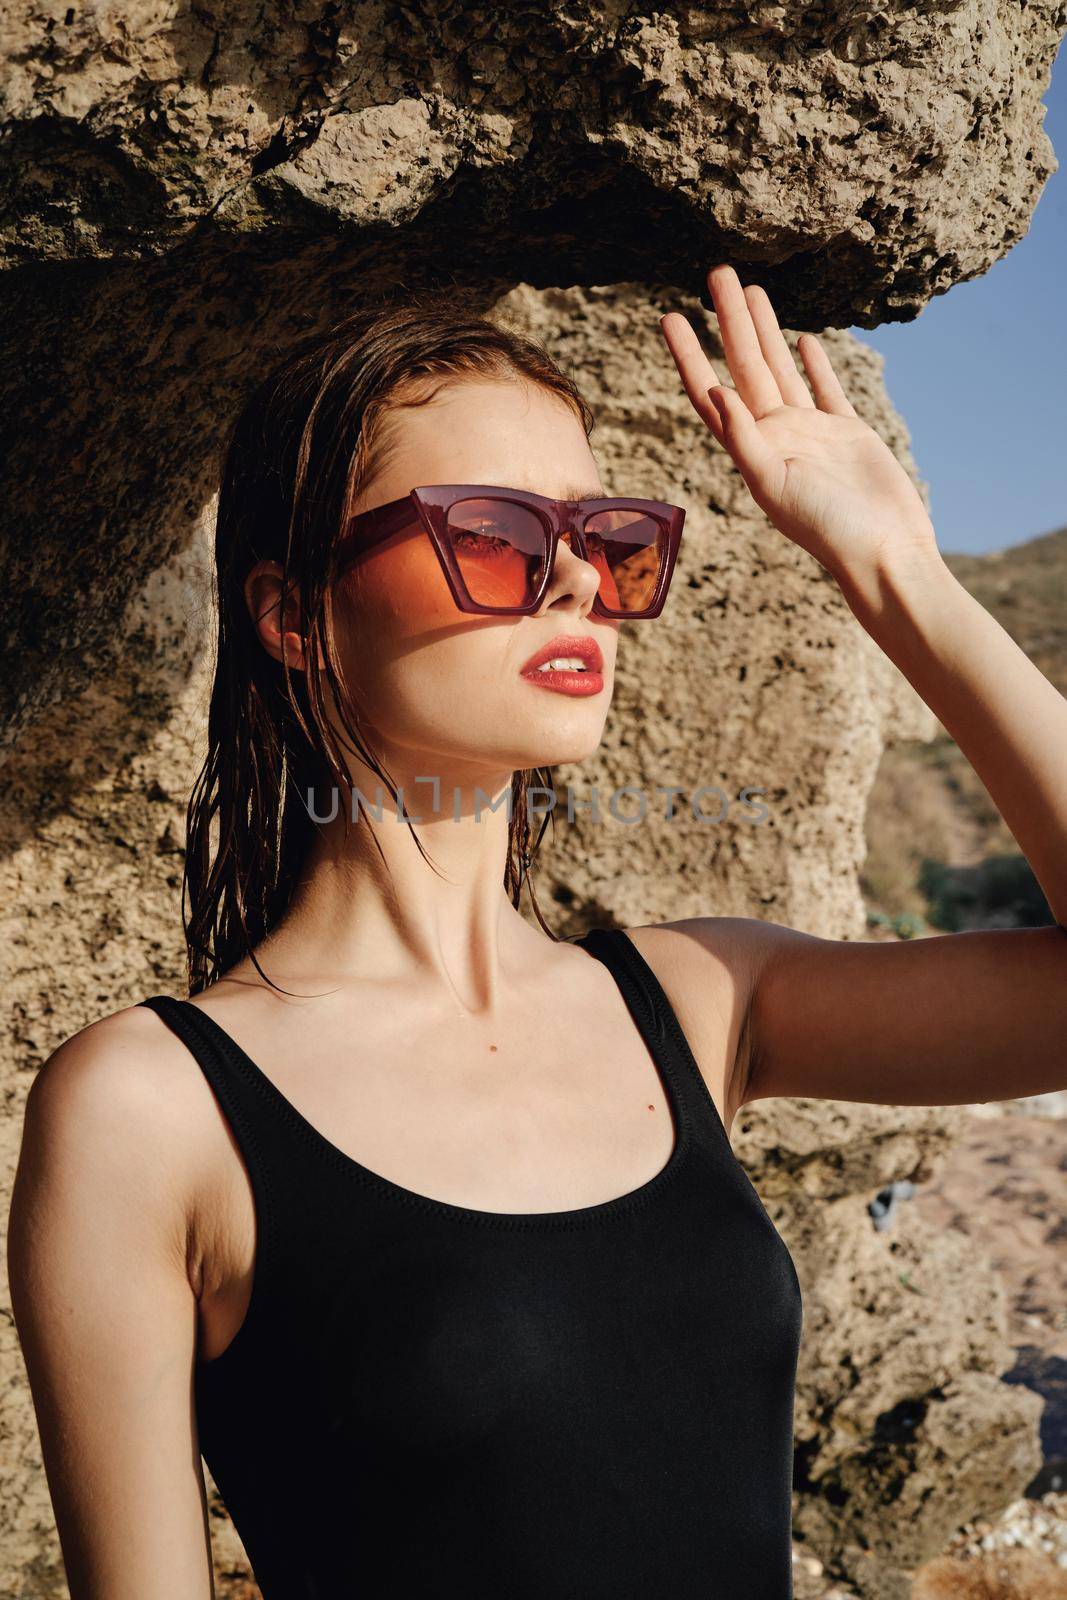 woman wearing sunglasses swimsuit dispensing rocks travel by Vichizh